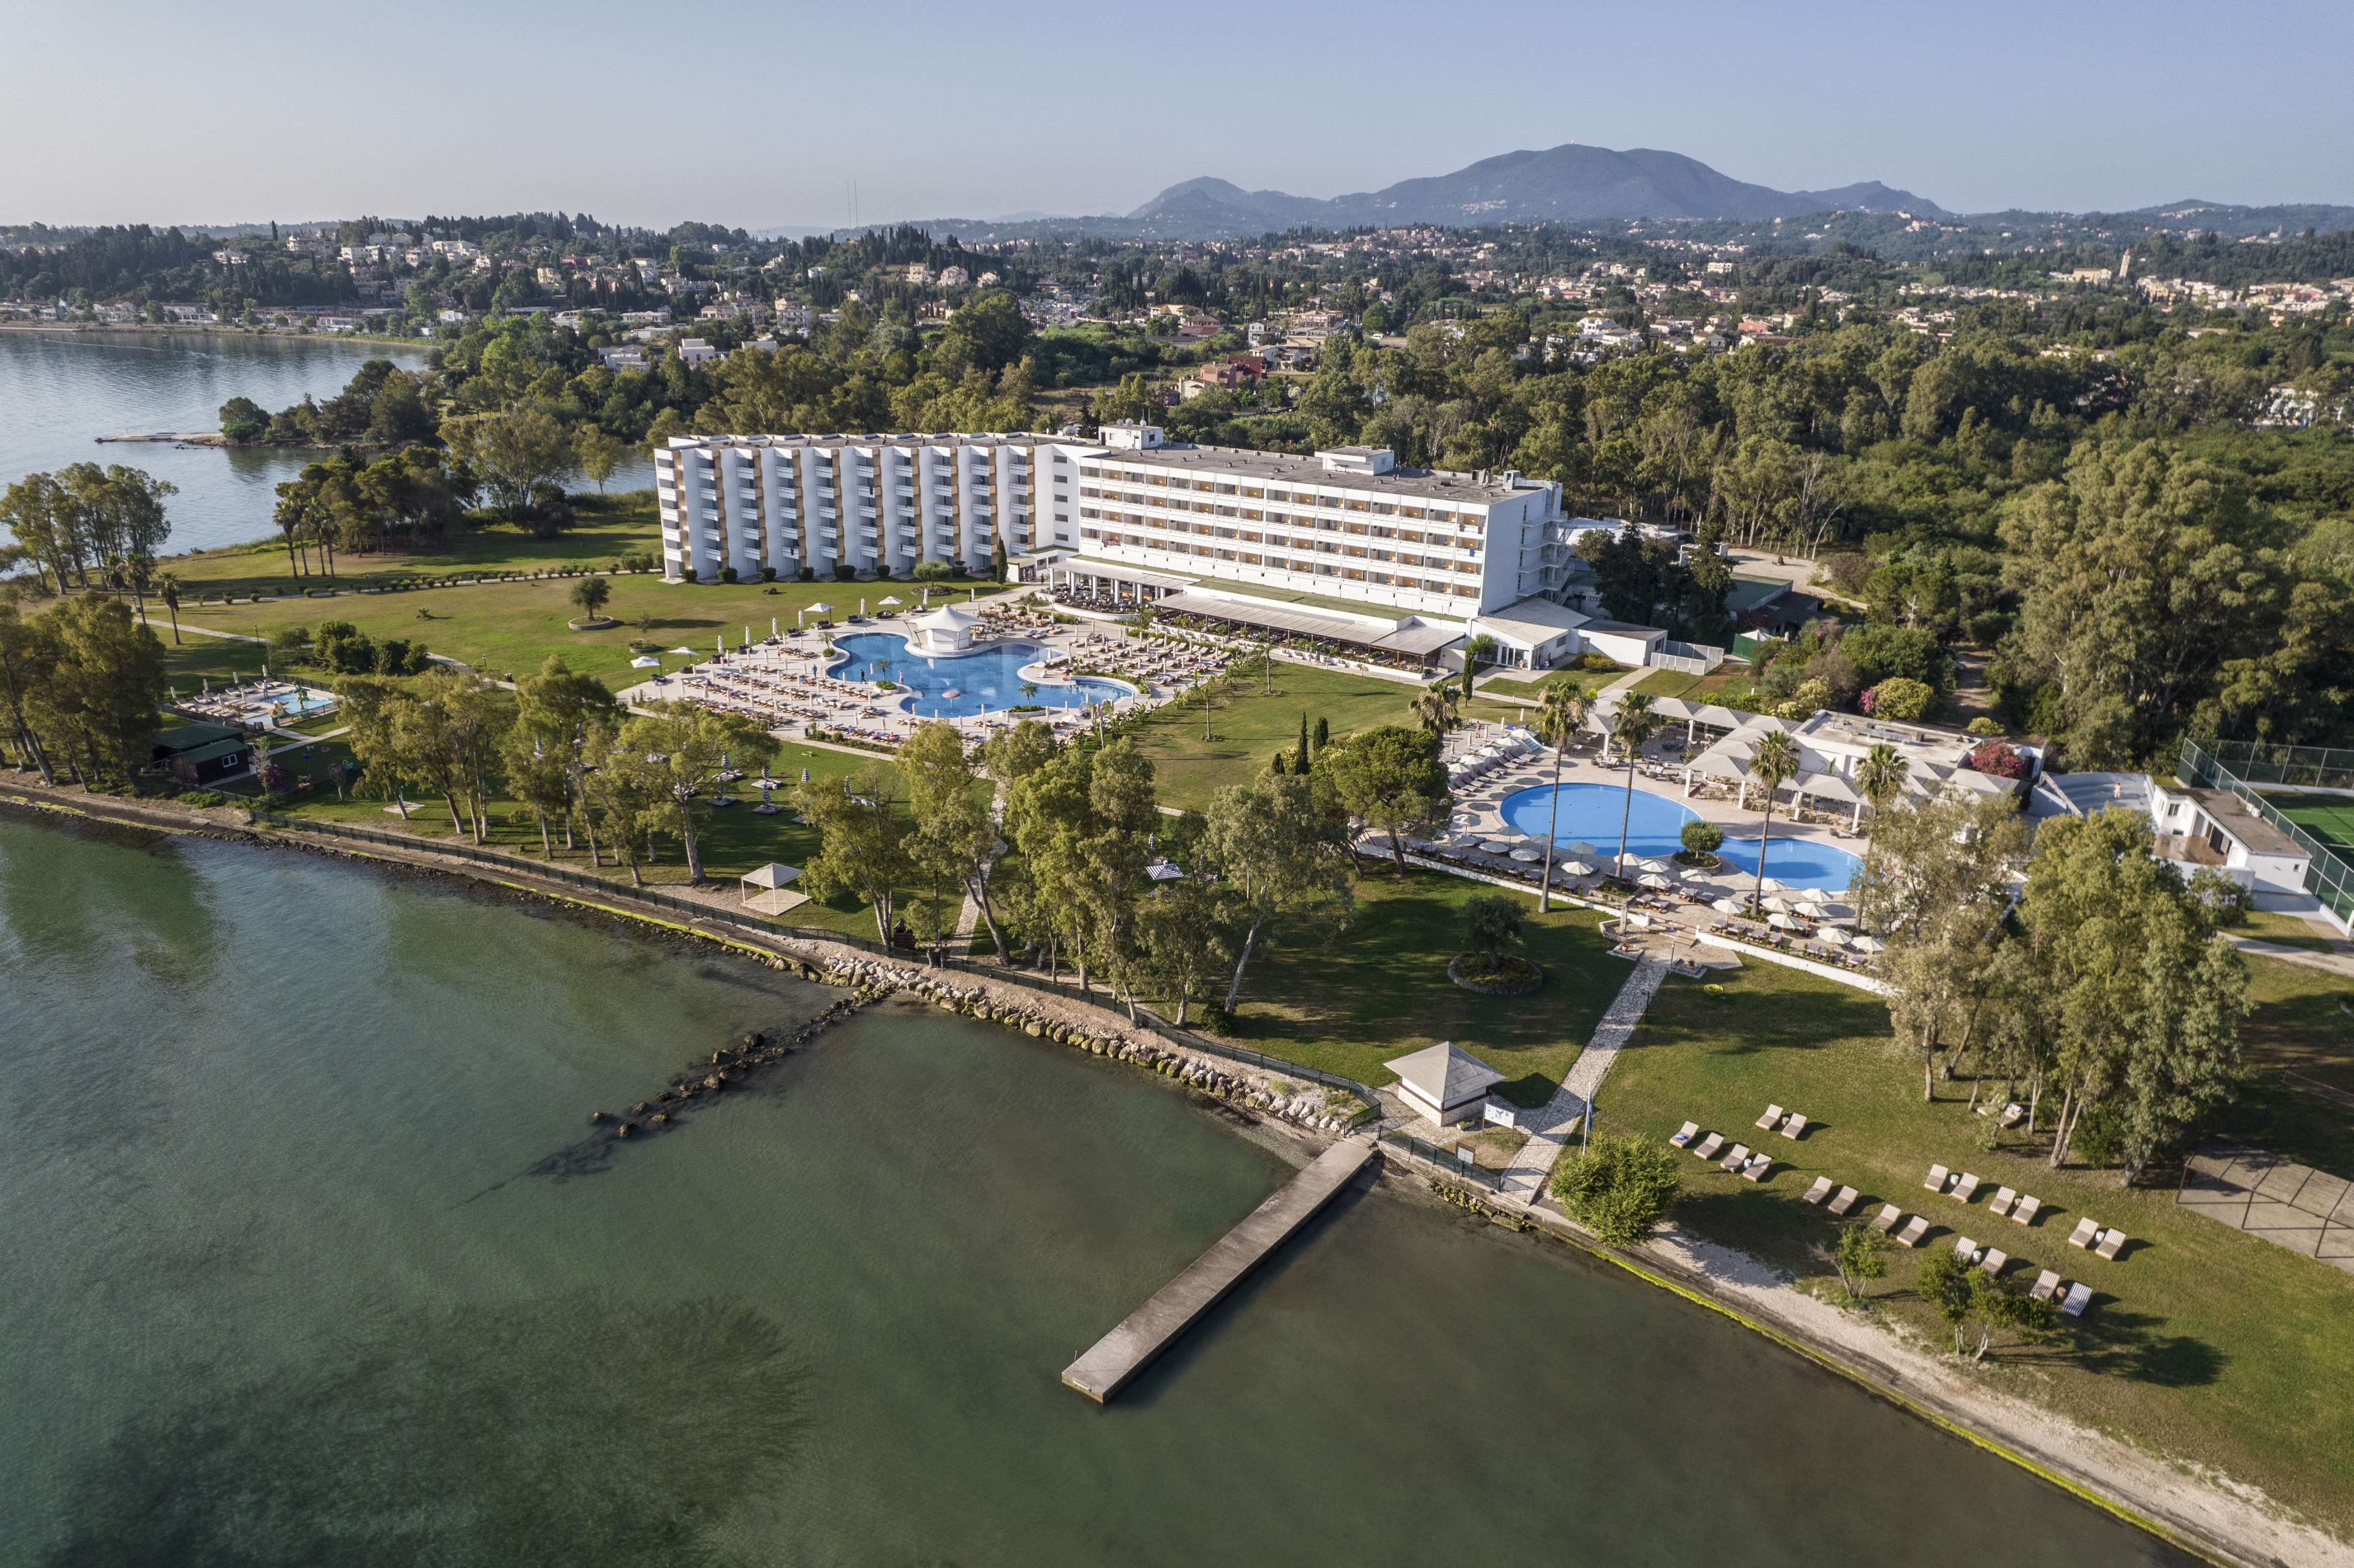 5* Kerkyra Blue Hotel N’ Spa - Αλυκές Ποταμού, Κέρκυρα